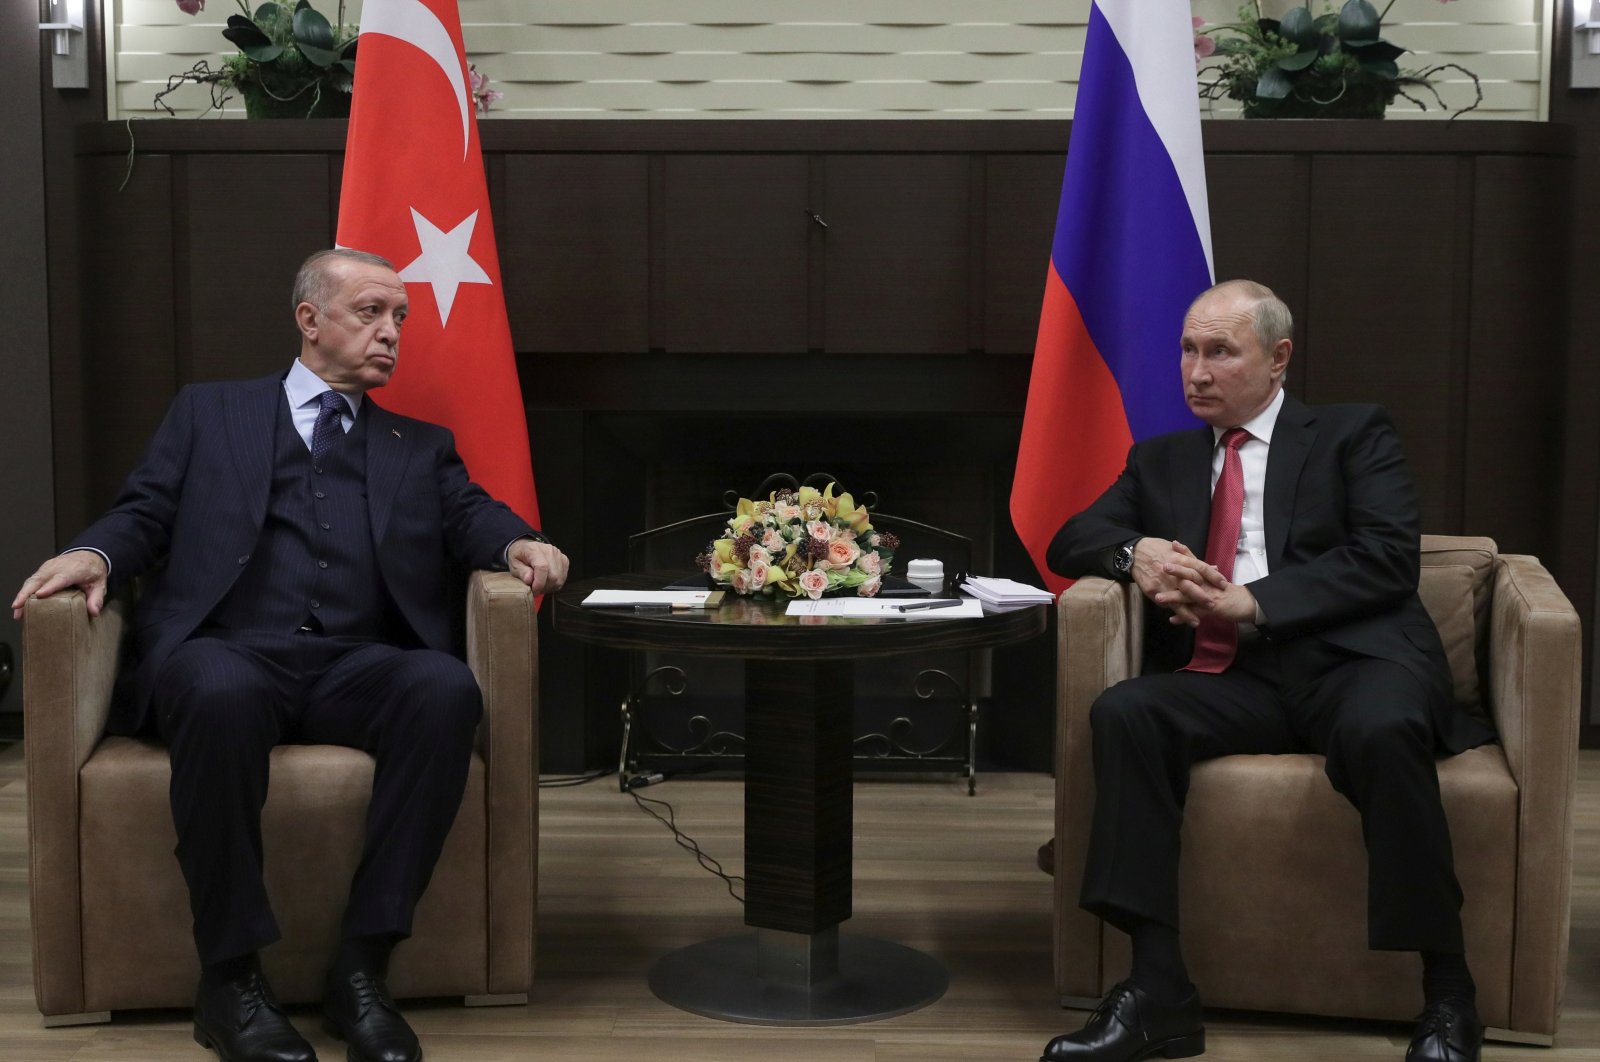 President Recep Tayyip Erdoğan attends a meeting with Vladimir Putin in Sochi, Russia, Sept. 29, 2021. (Sputnik/Vladimir Smirnov/Pool via Reuters)